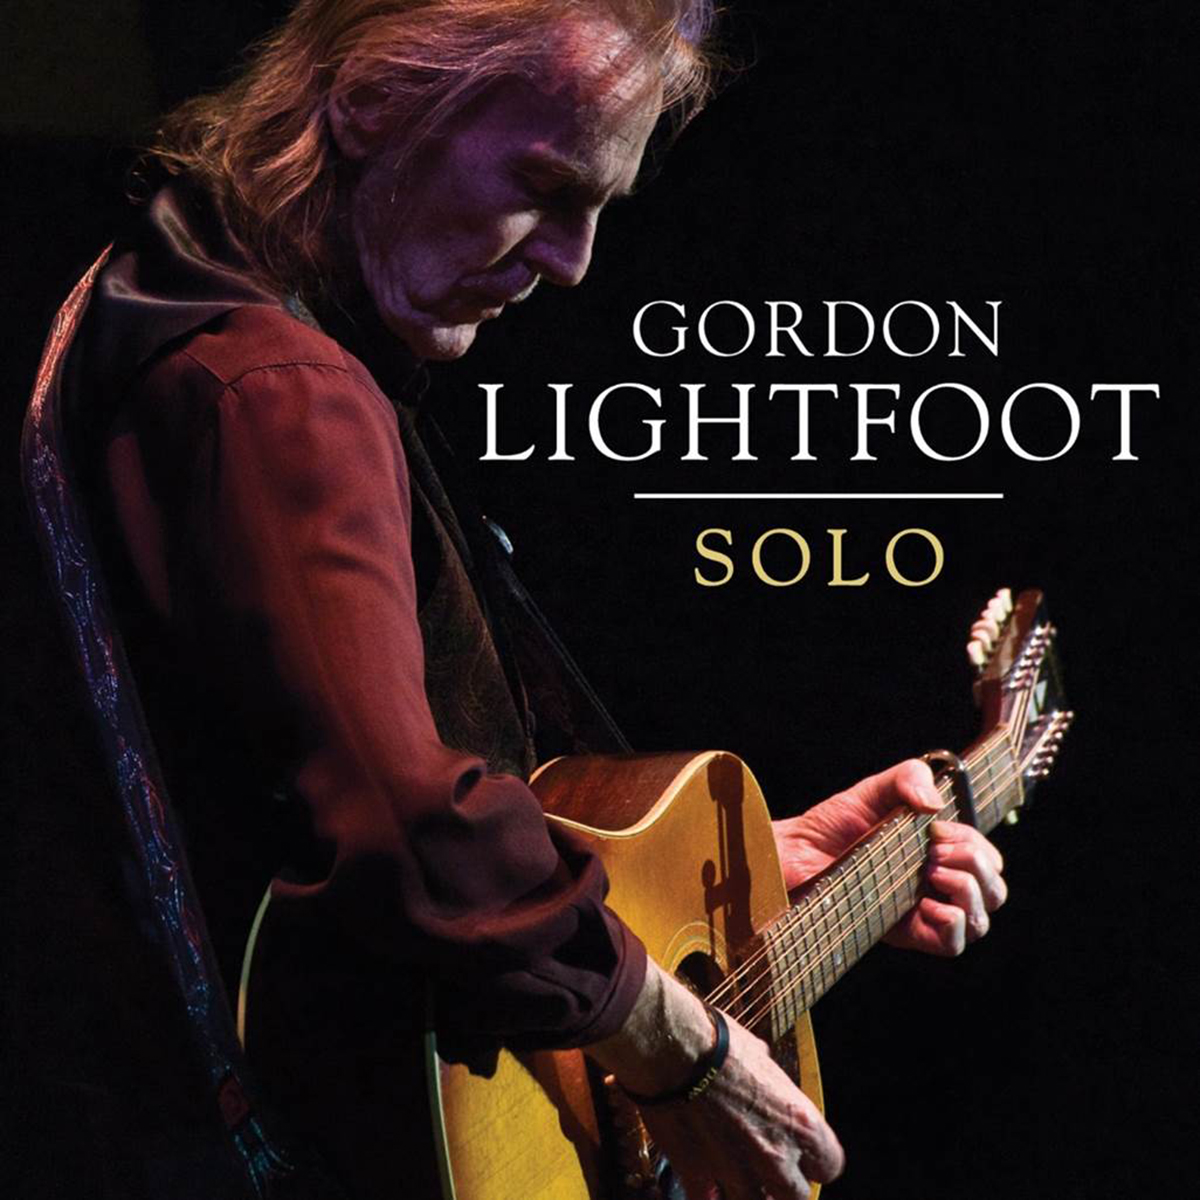 Gordon Lightfoot Solo Available Today